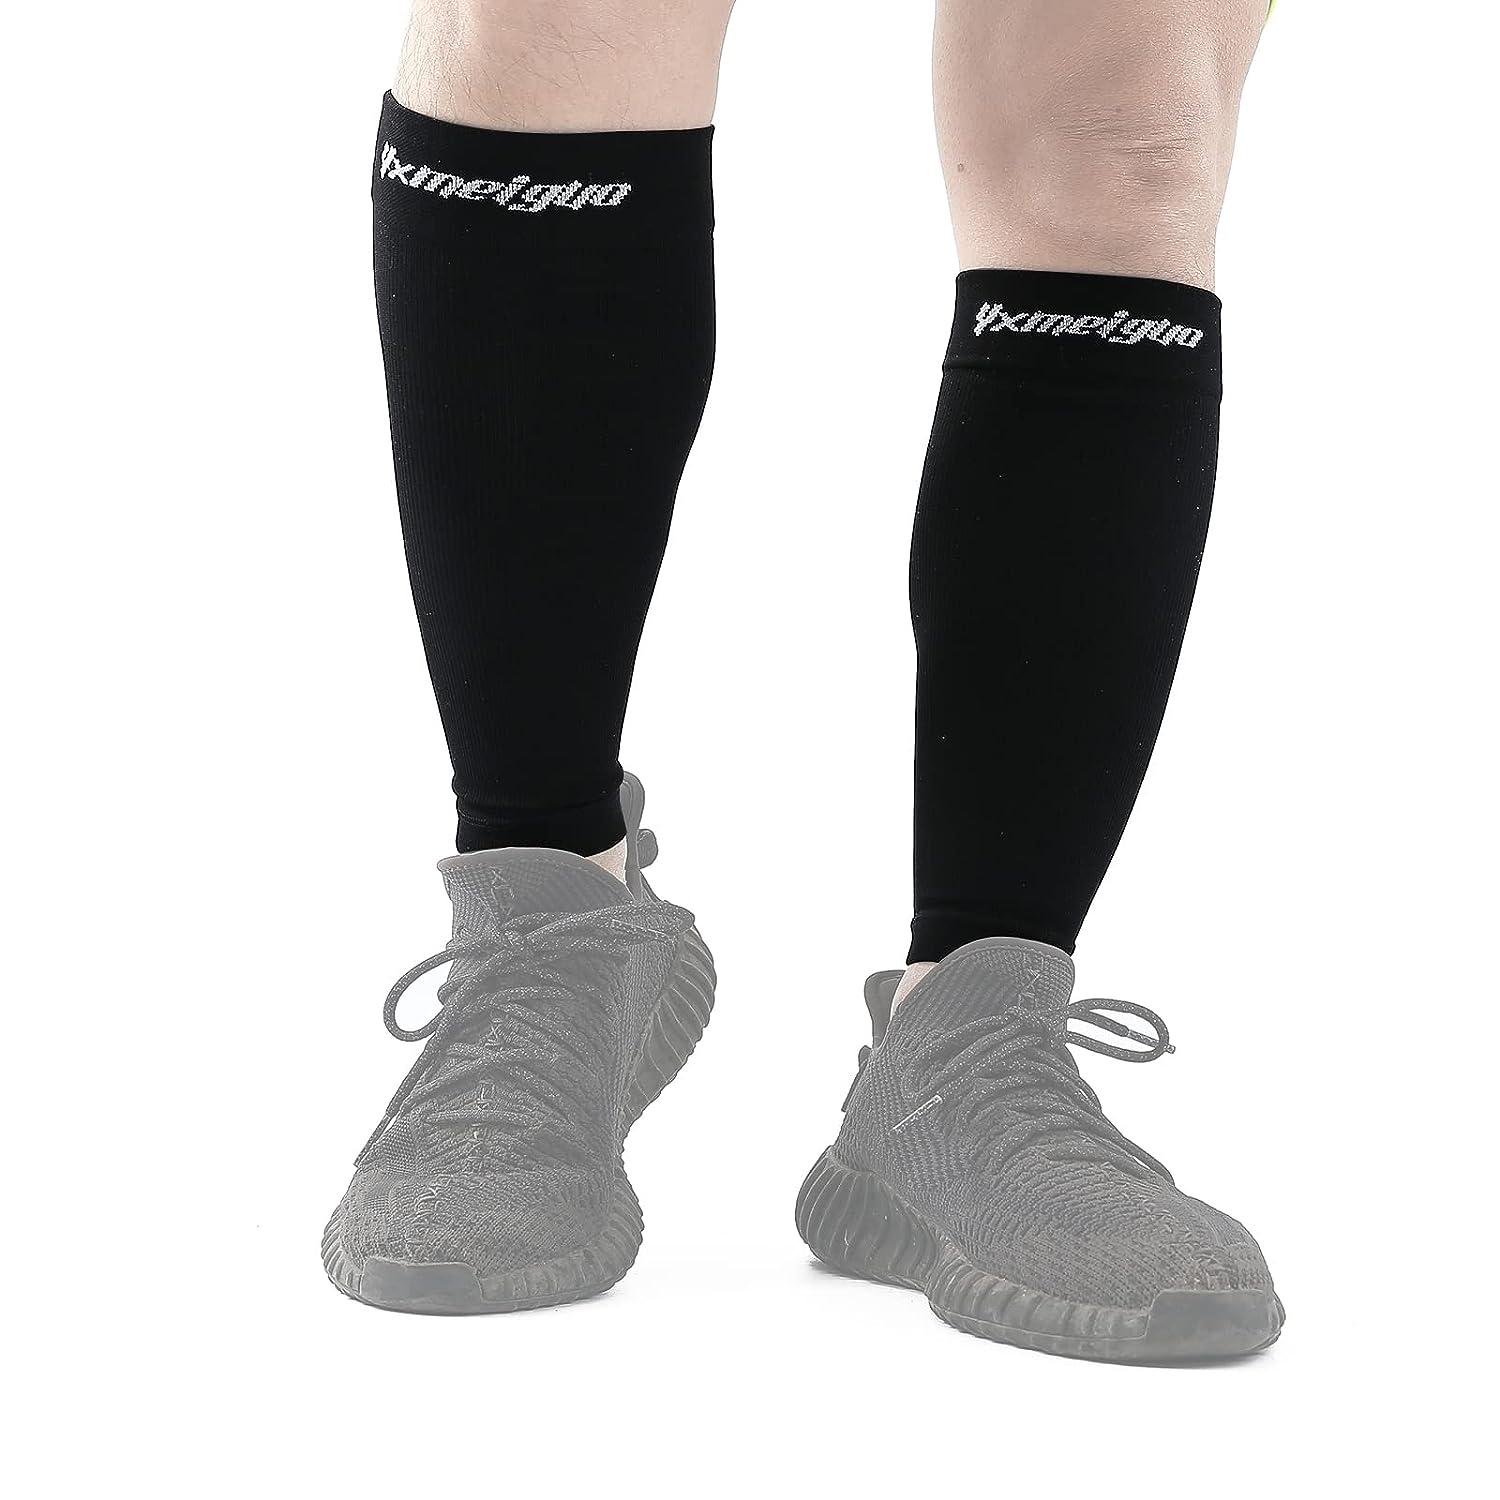 Lawor Socks For Men&Women Calf Compression Sleeve Leg Compression Socks For  Shin Splint, Calf Pain Relief Black Xl 